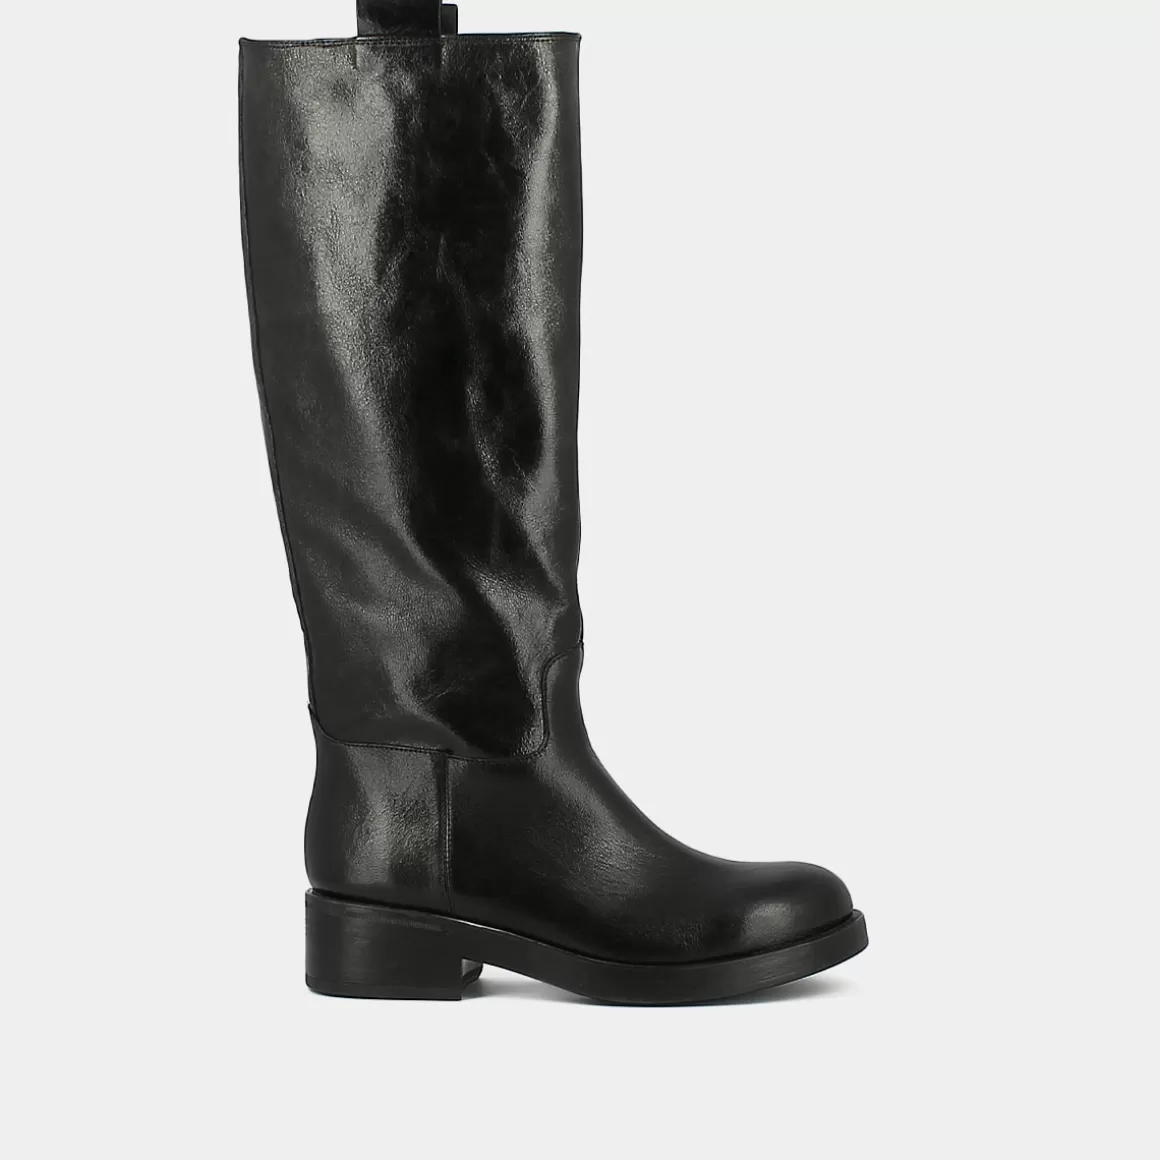 High boots<Jonak Flash Sale